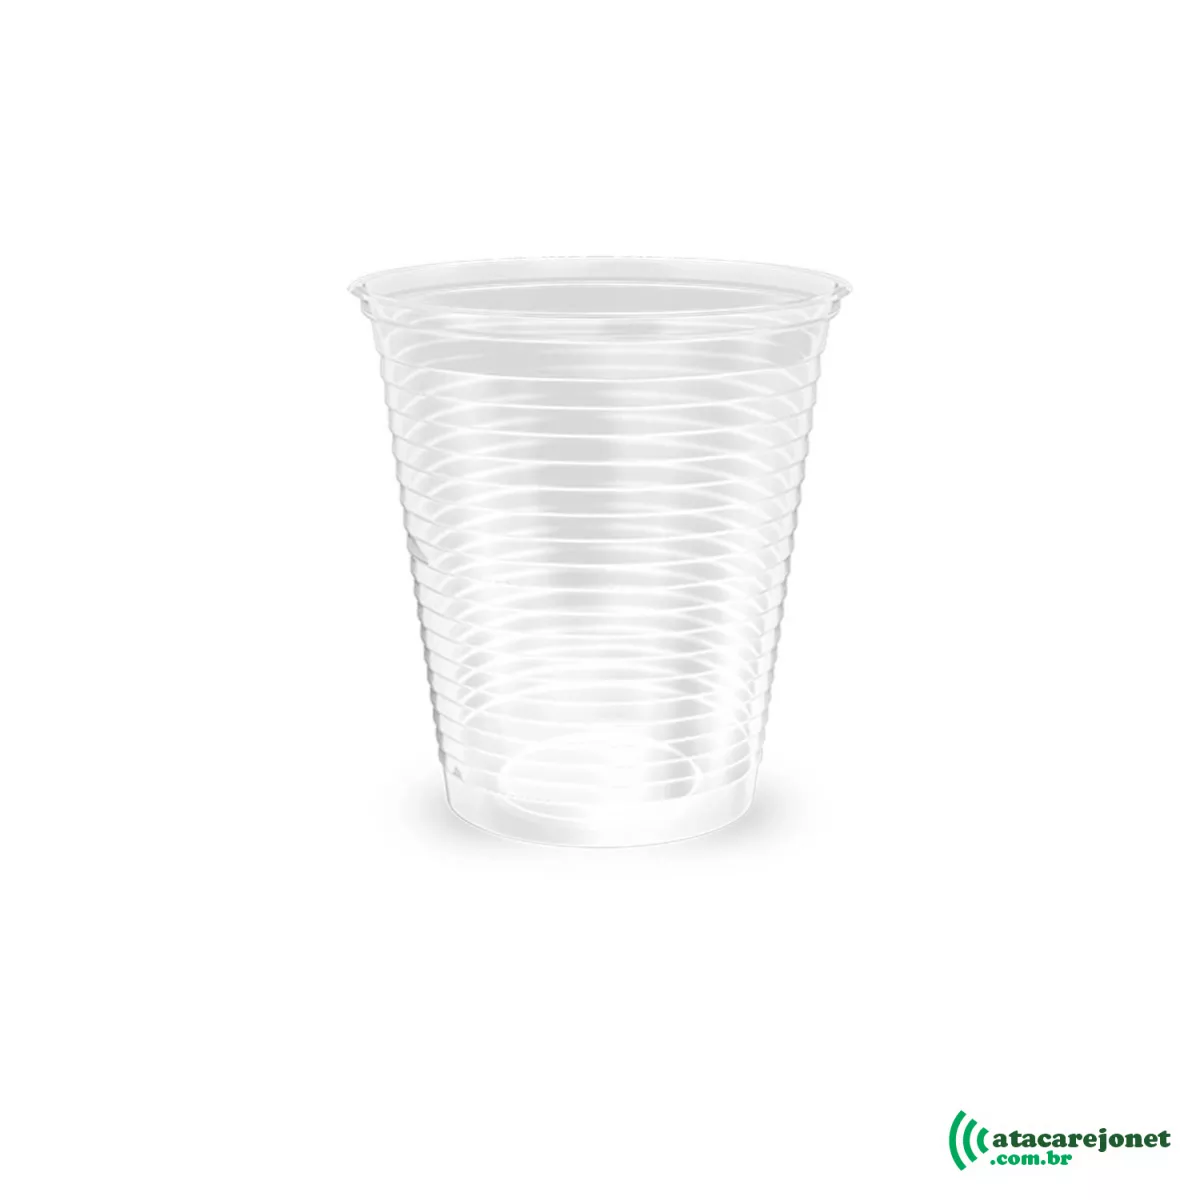 Copo Plástico Descartável Transparente 180ml com 100 unidades - Copozan